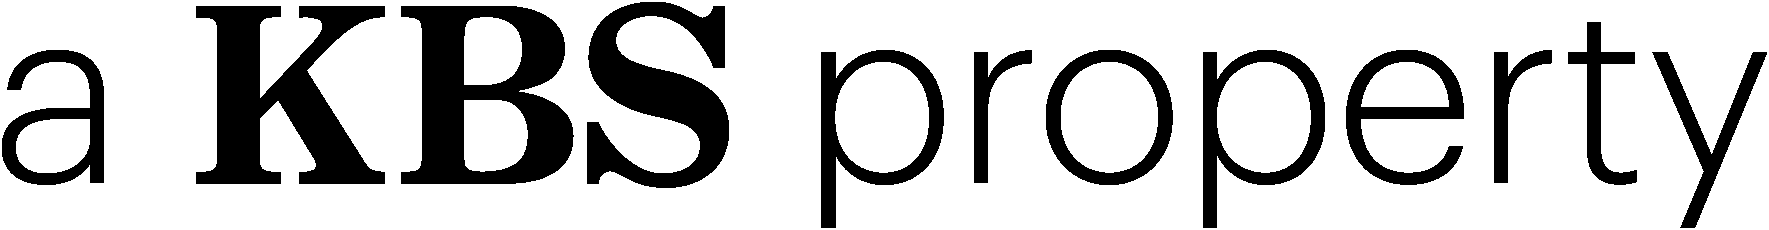 KBS_Logo-Black.png